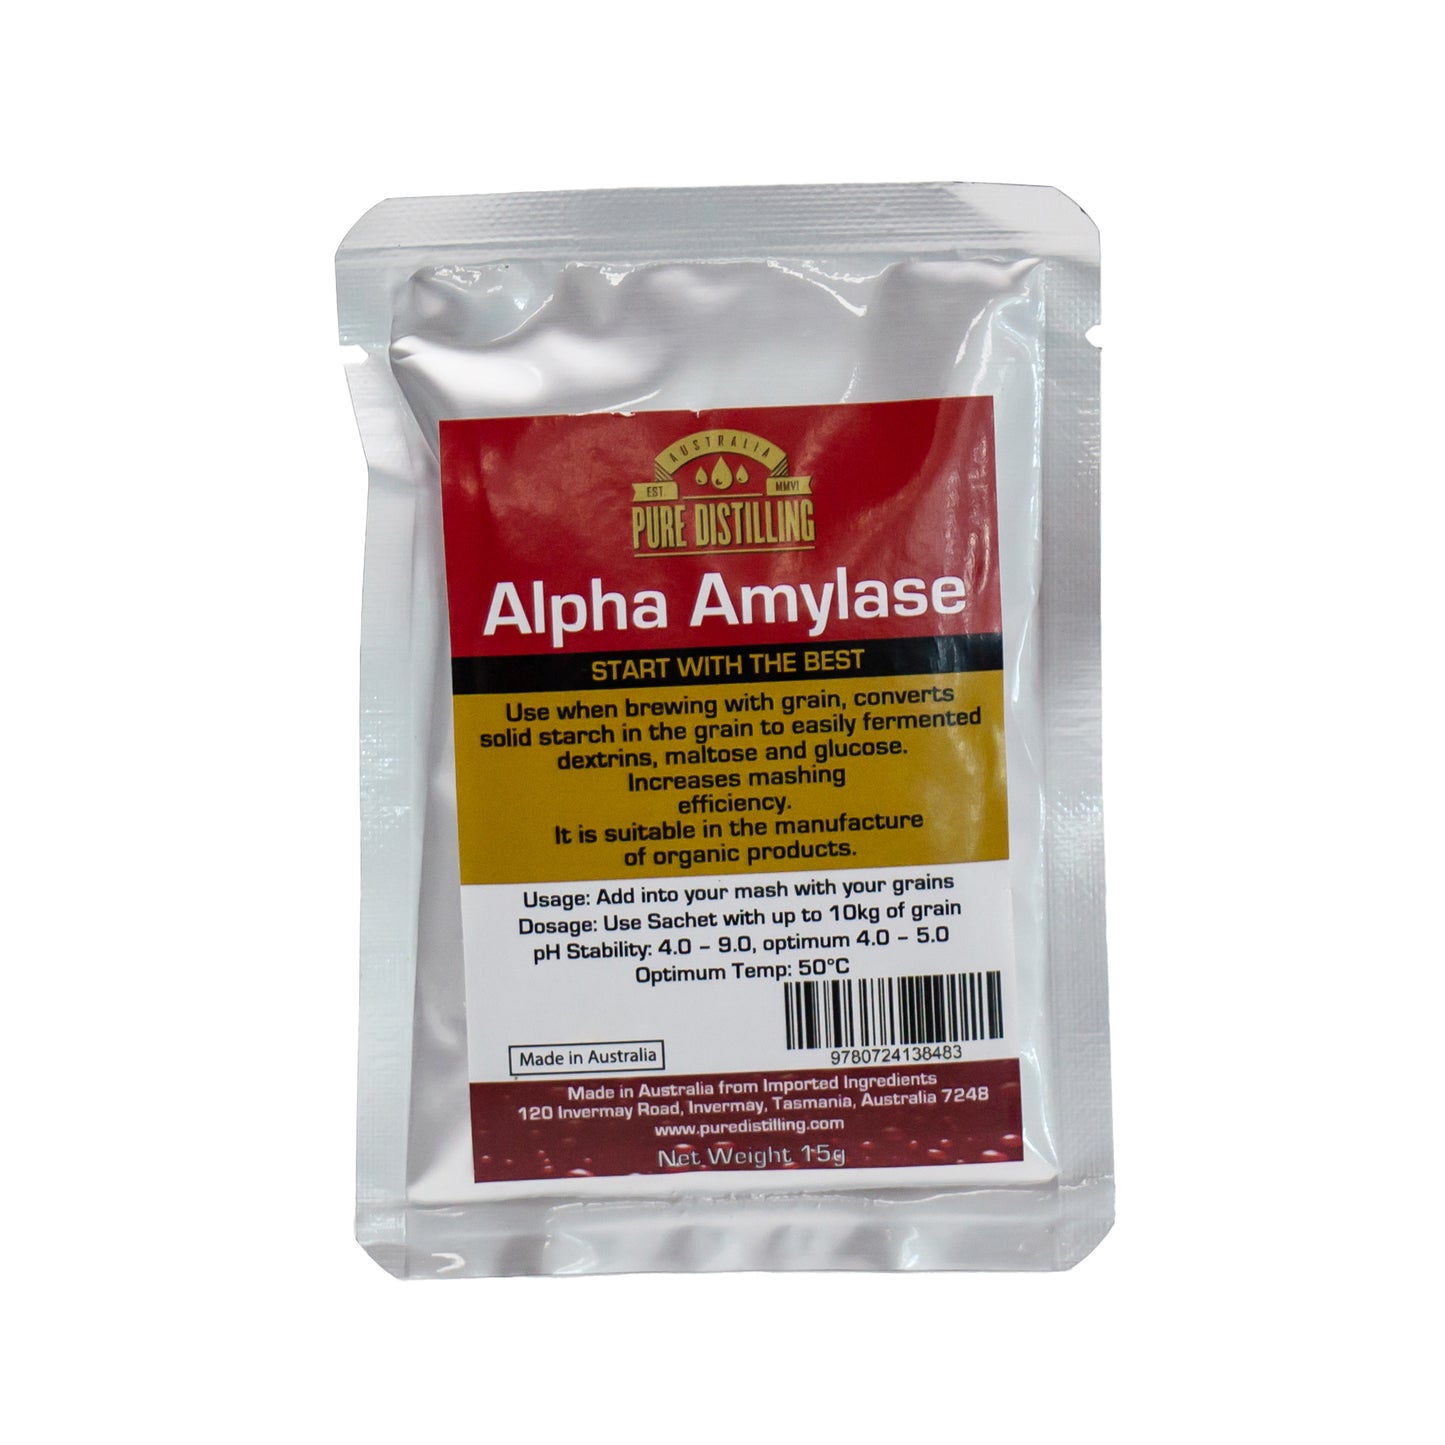 15g packet of alpha amylase